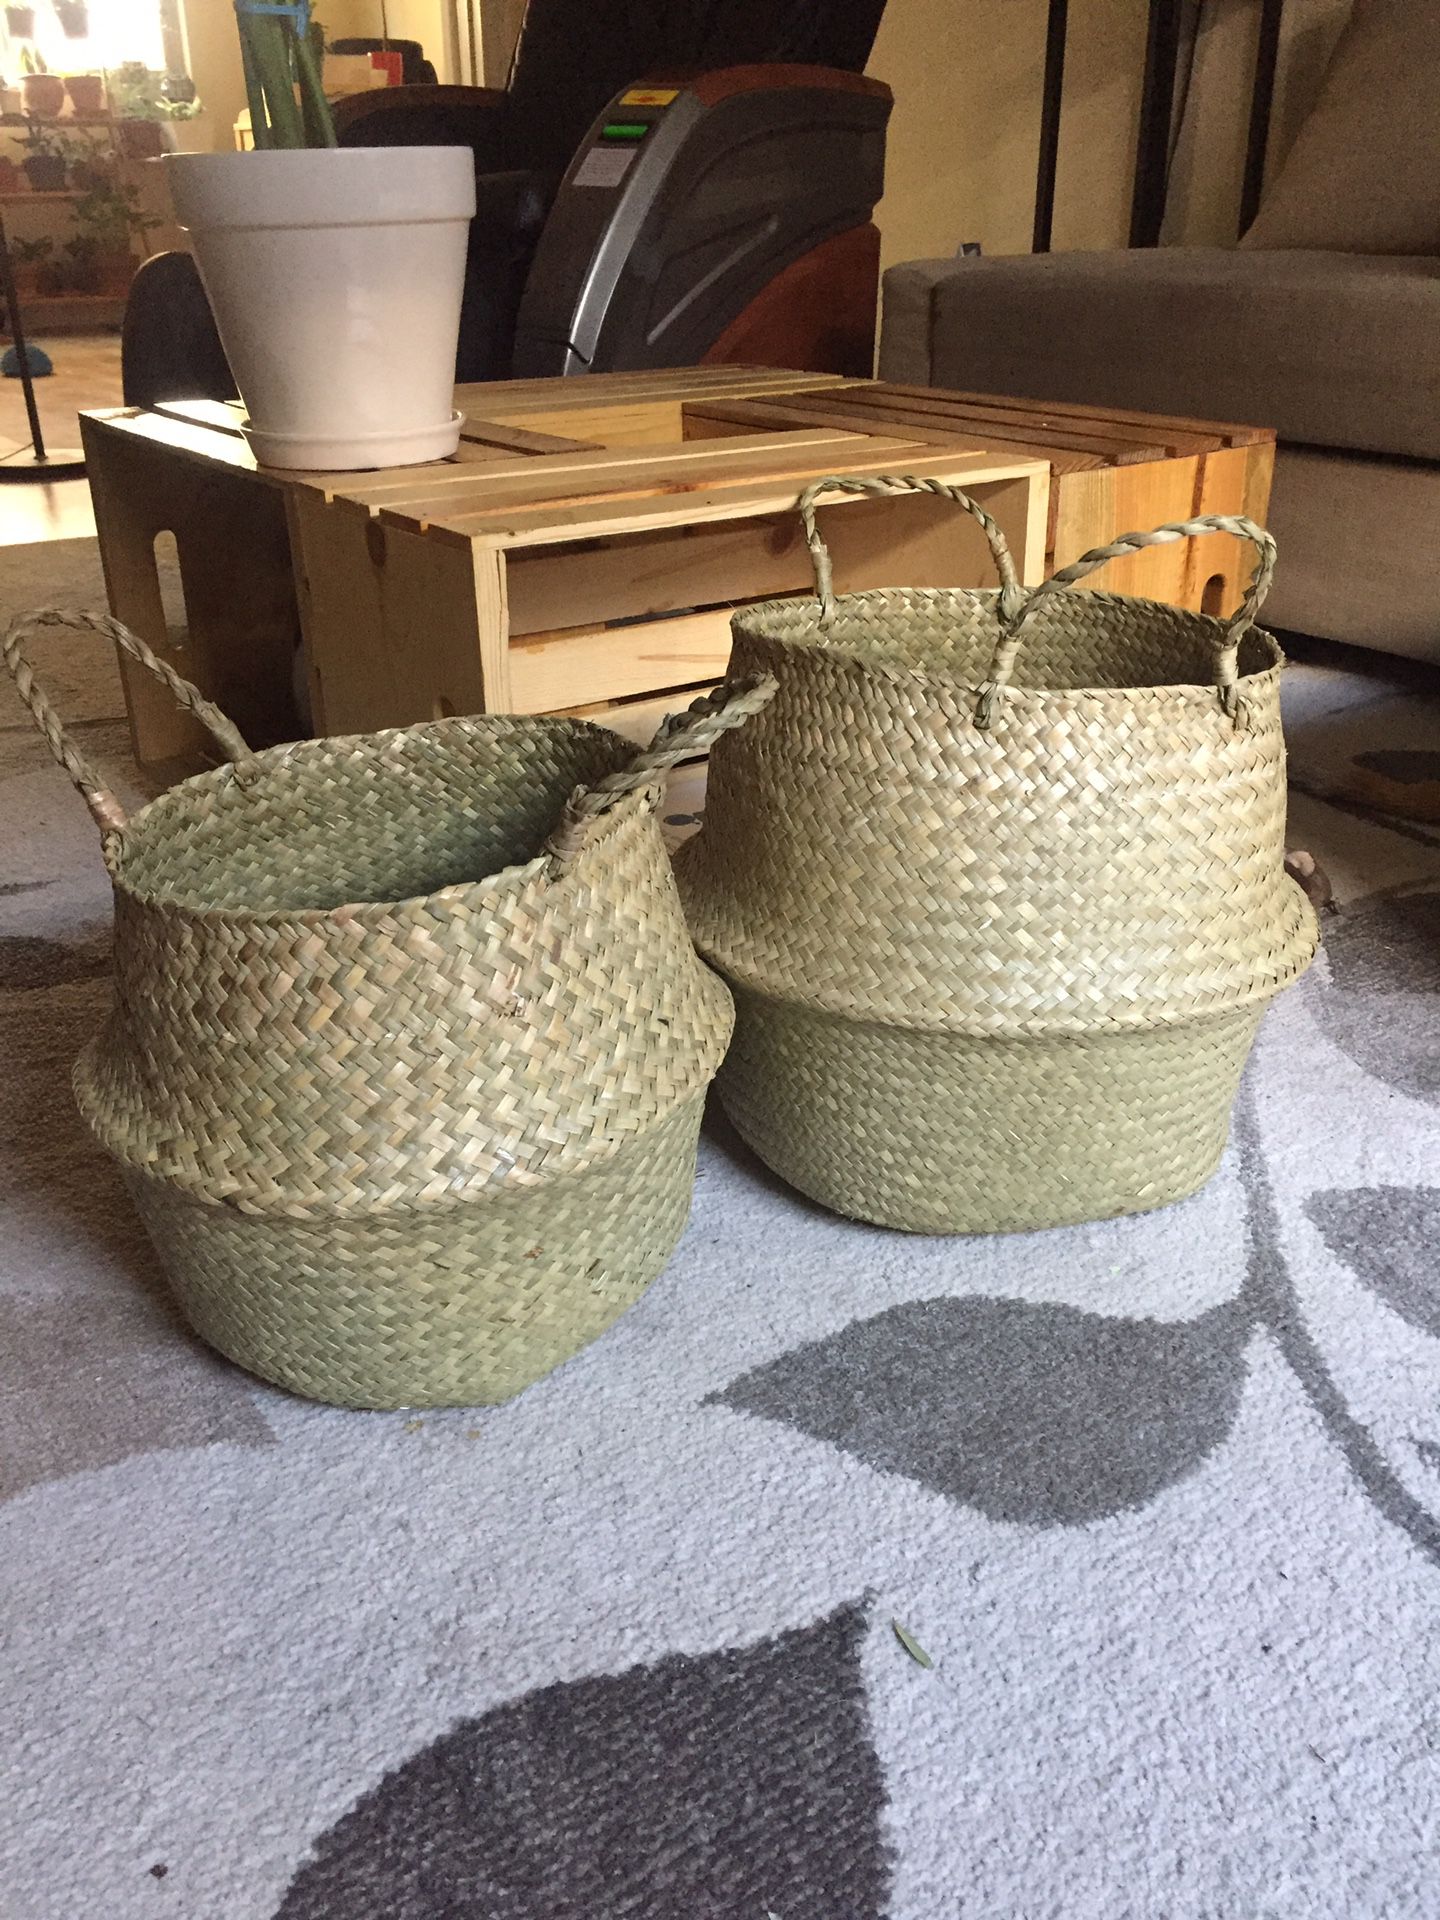 Plant baskets